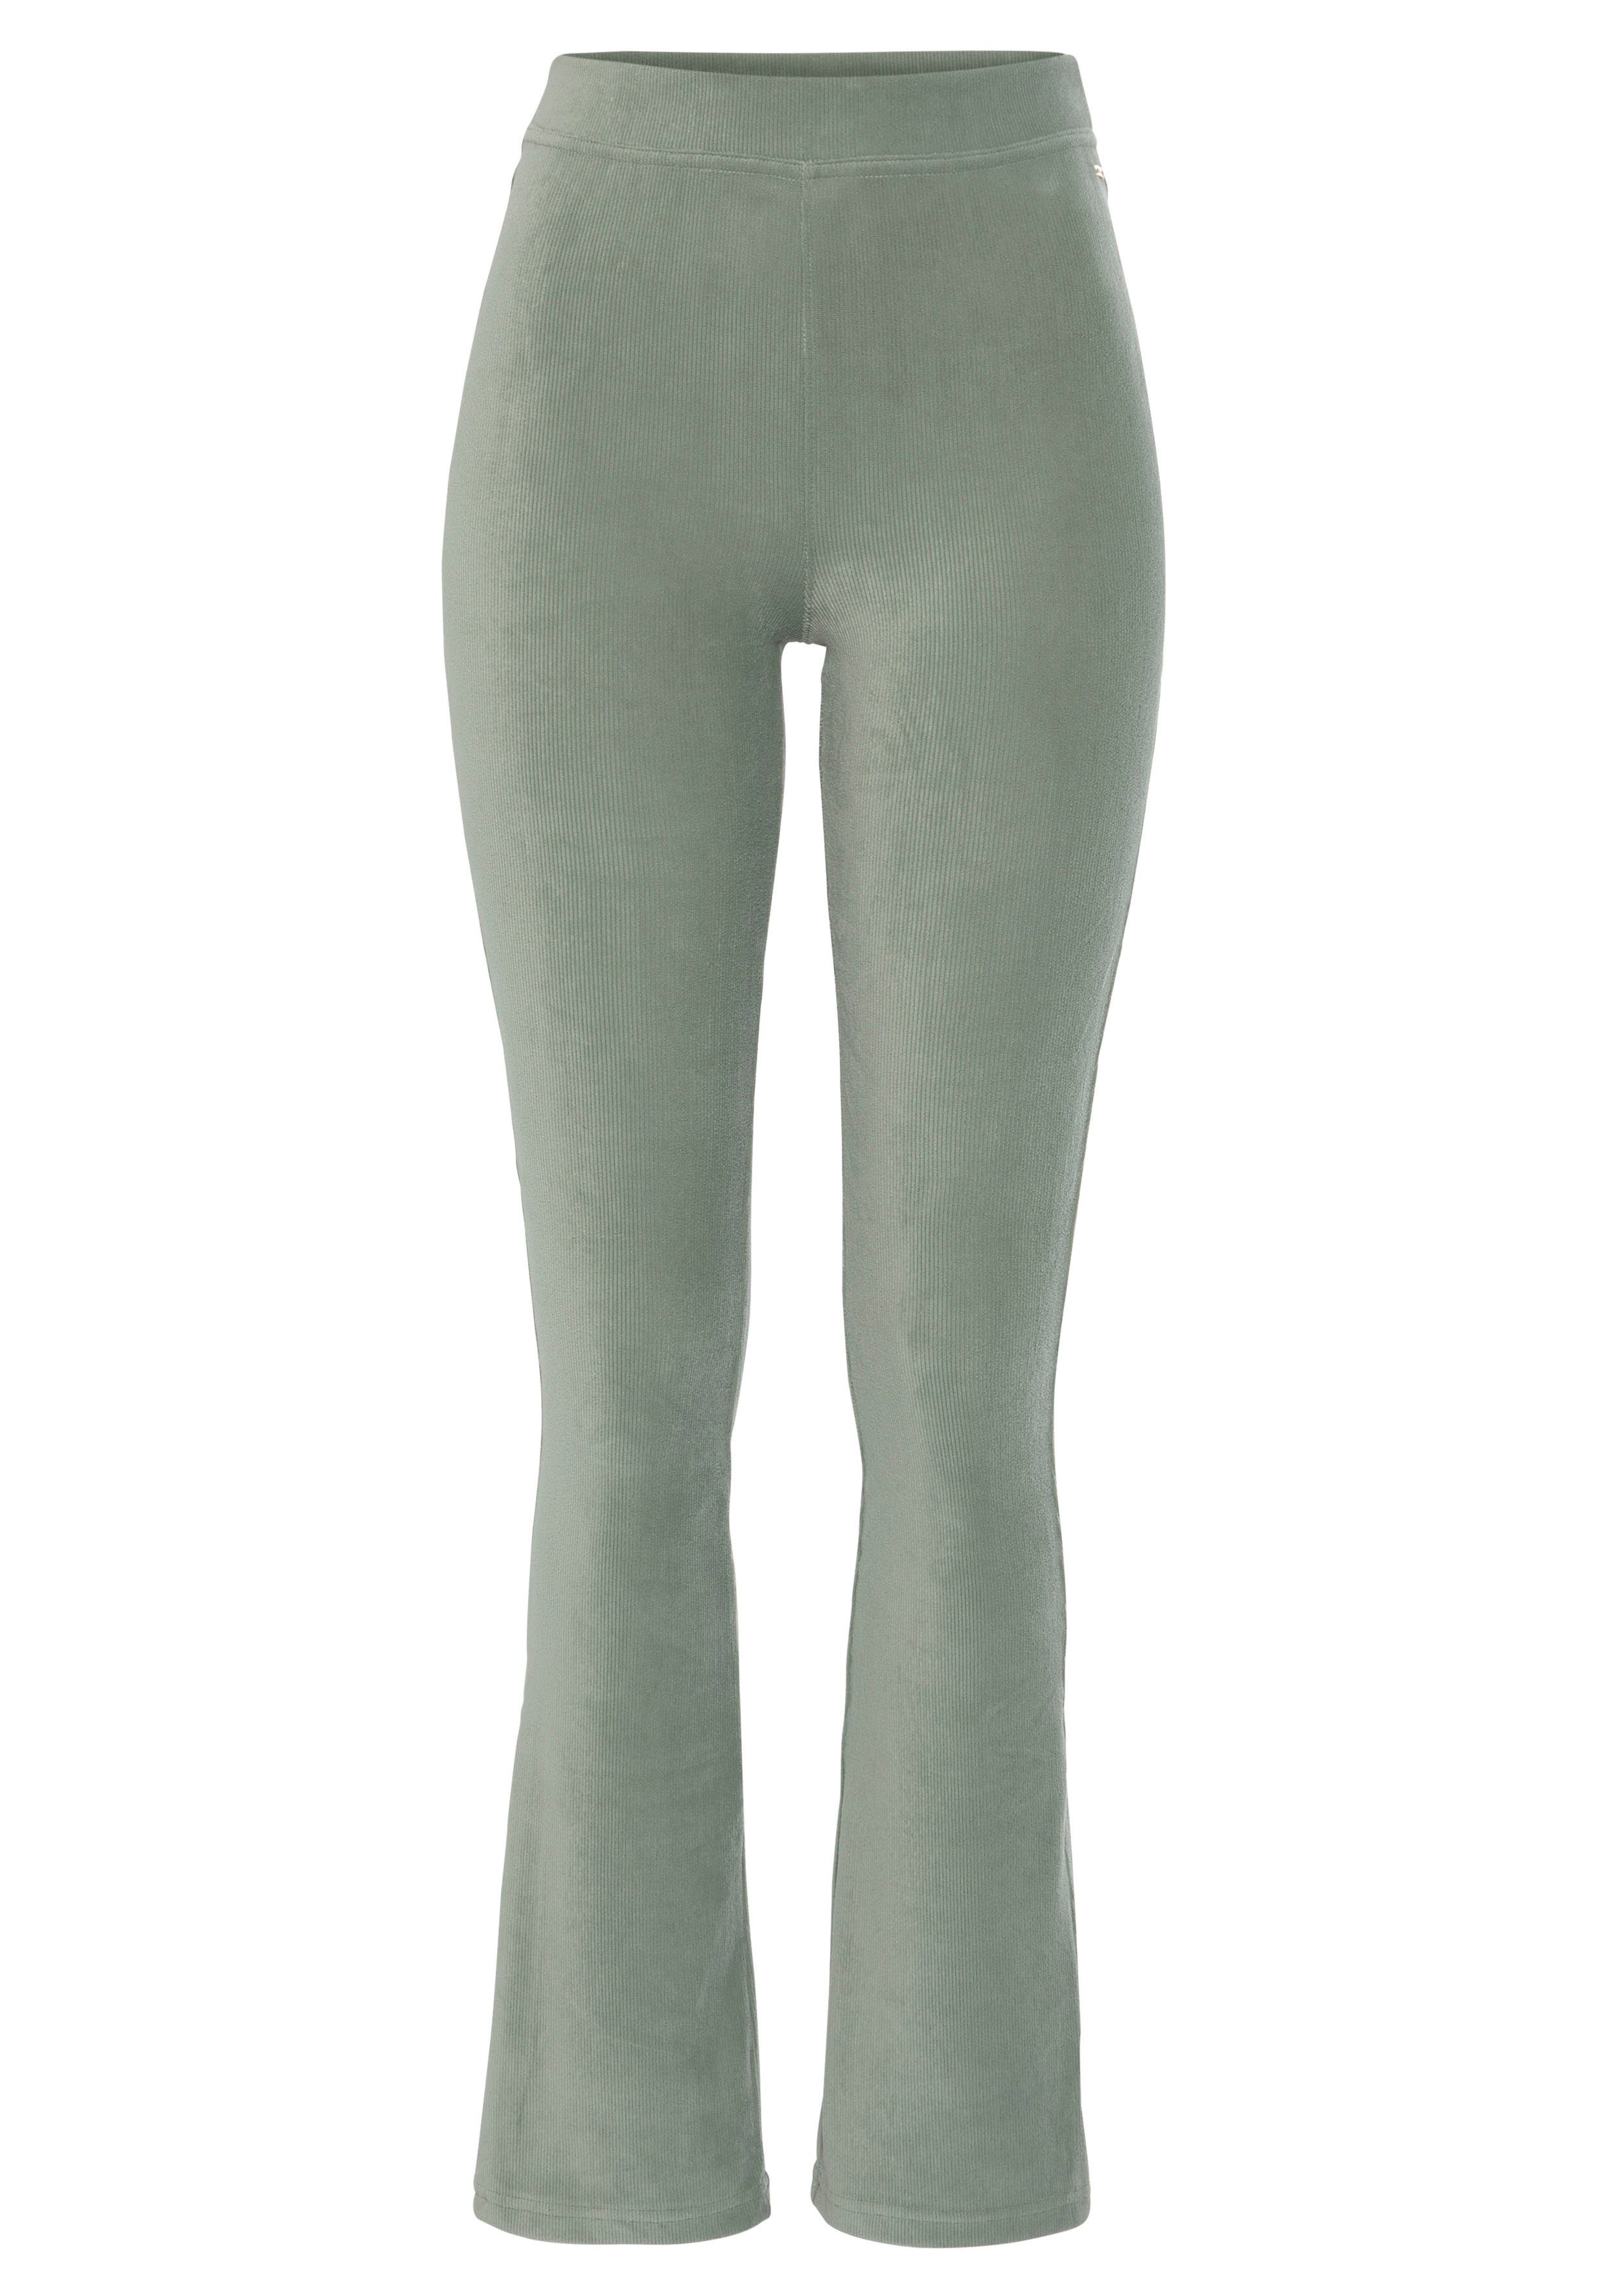 mint Jazzpants aus in LASCANA Cord-Optik, Material Loungewear weichem grün